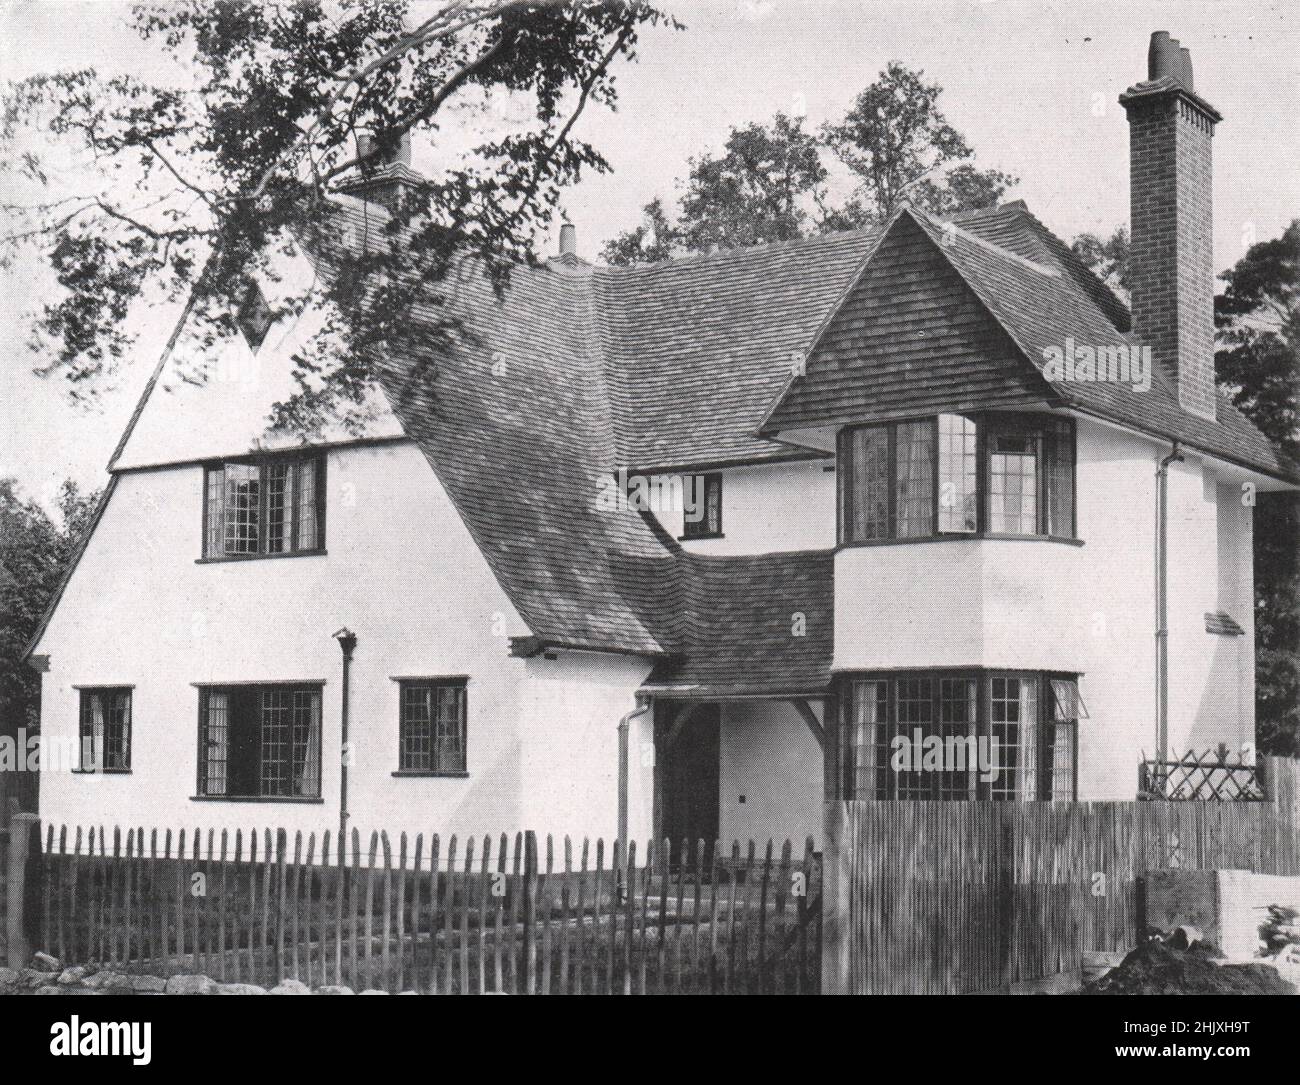 'The Homestead', Chislehurst - ingresso frontale. Londra. E. J. May, architetto (1908) Foto Stock